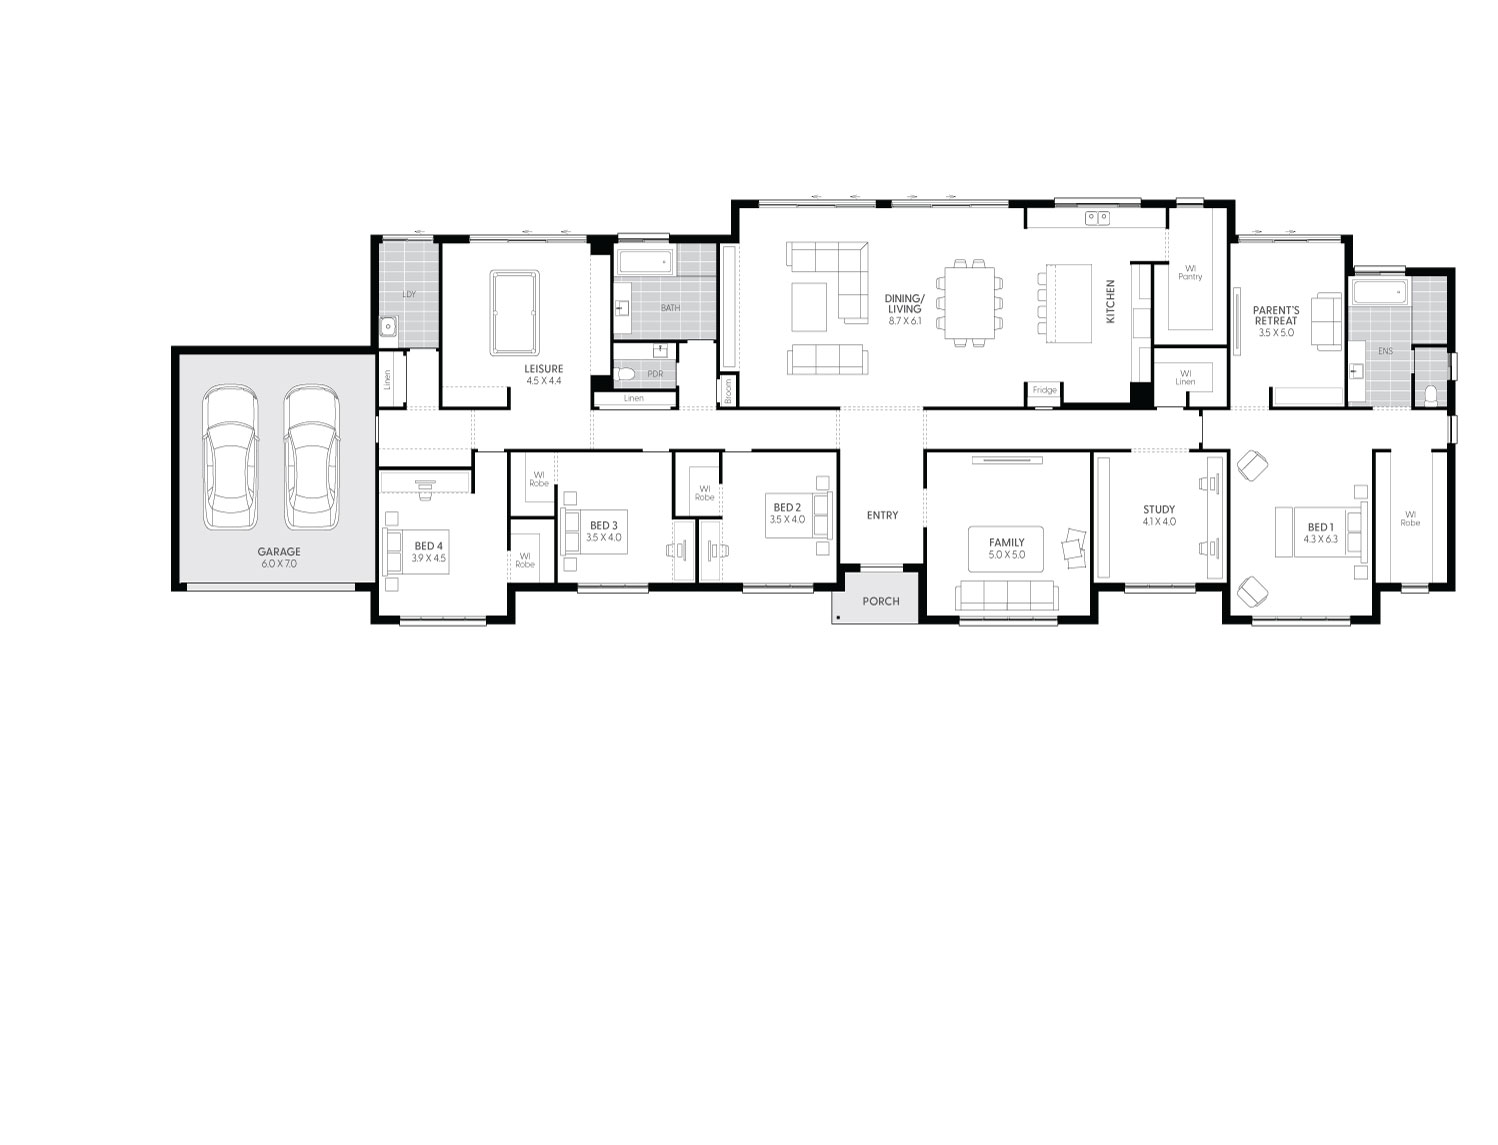 Sanford-47-single-storey-home-design-floor-plan-LHS_1.jpg 